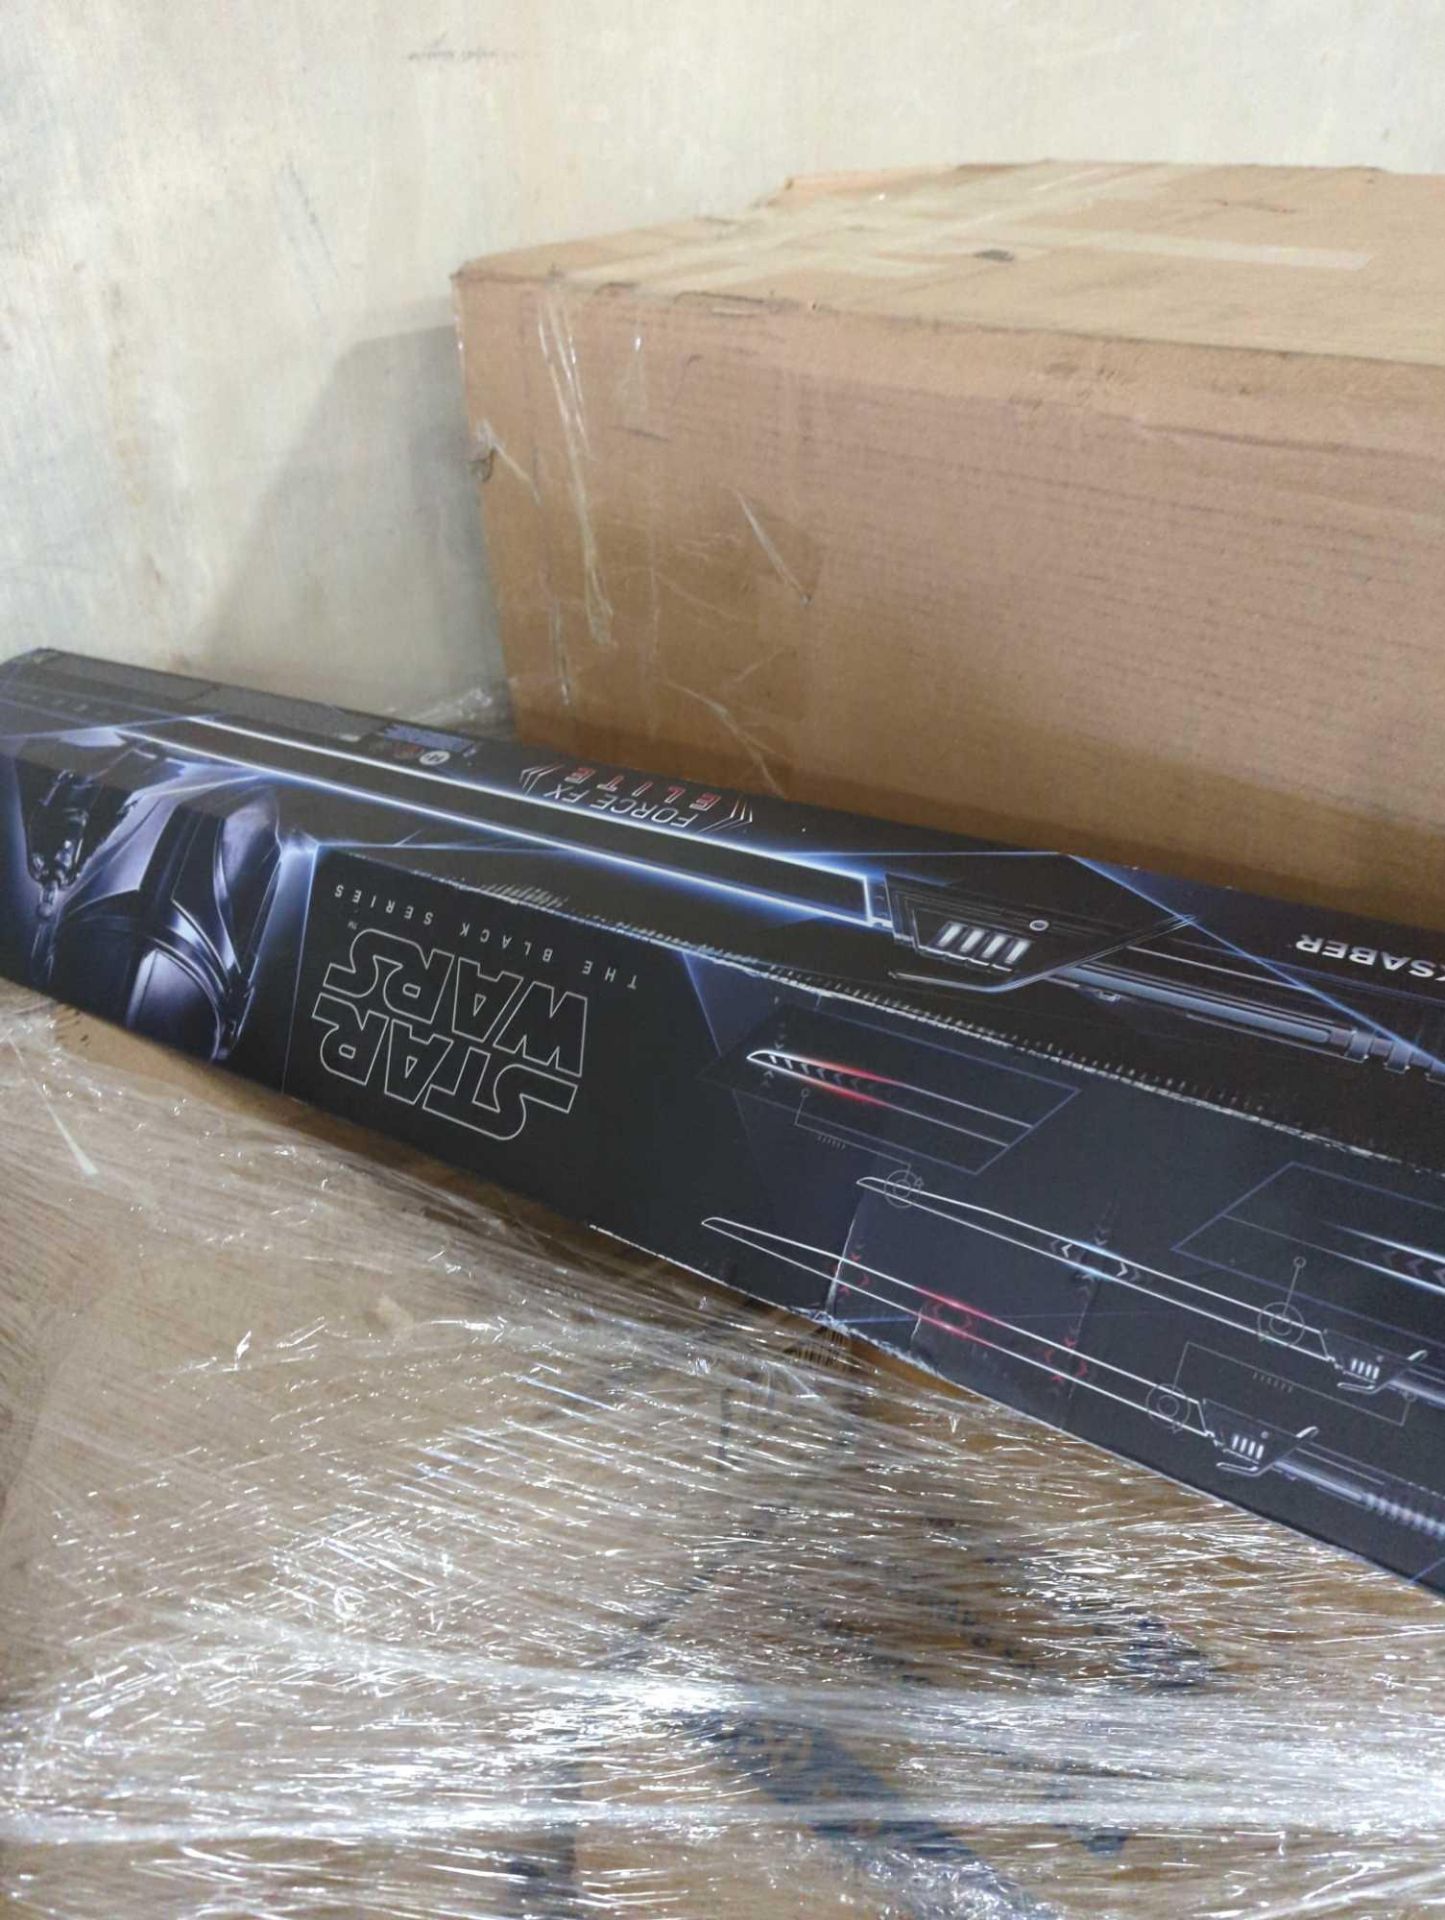 Star Wars light saber and more - Image 3 of 10